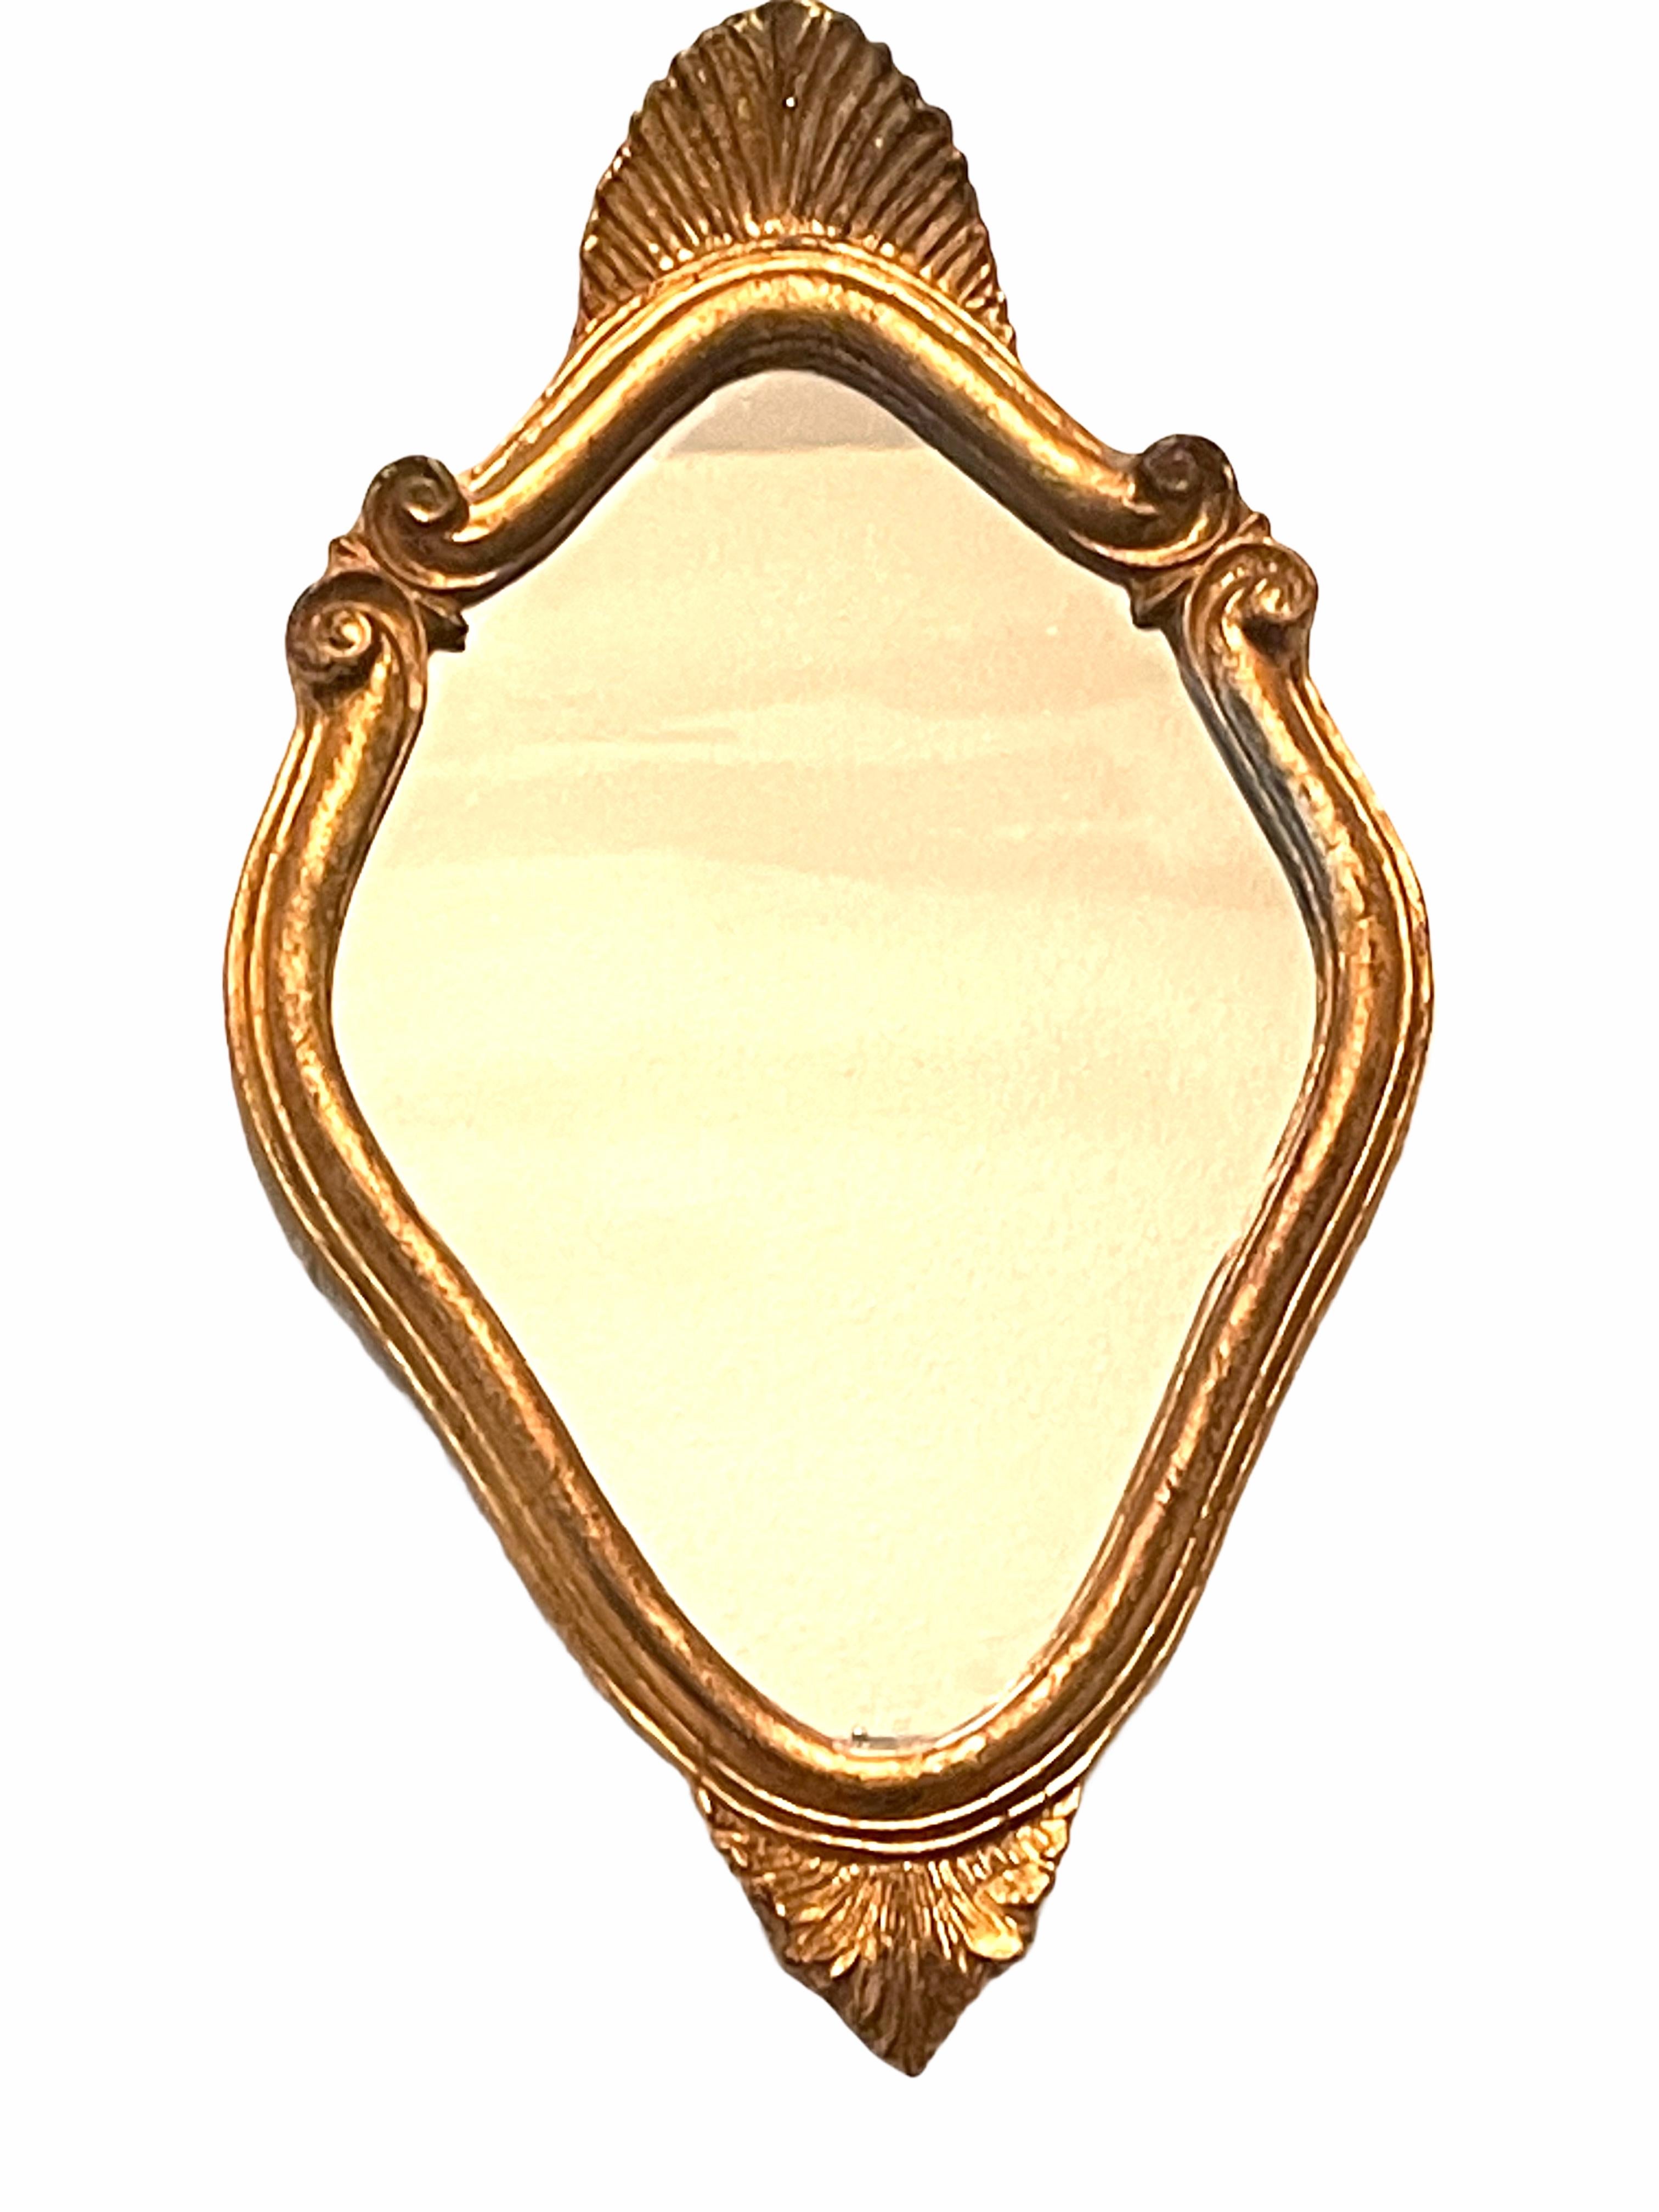 Italian Petite Hollywood Regency Gilded Tole Toleware Vanity Mirror Vintage, Italy 1960s